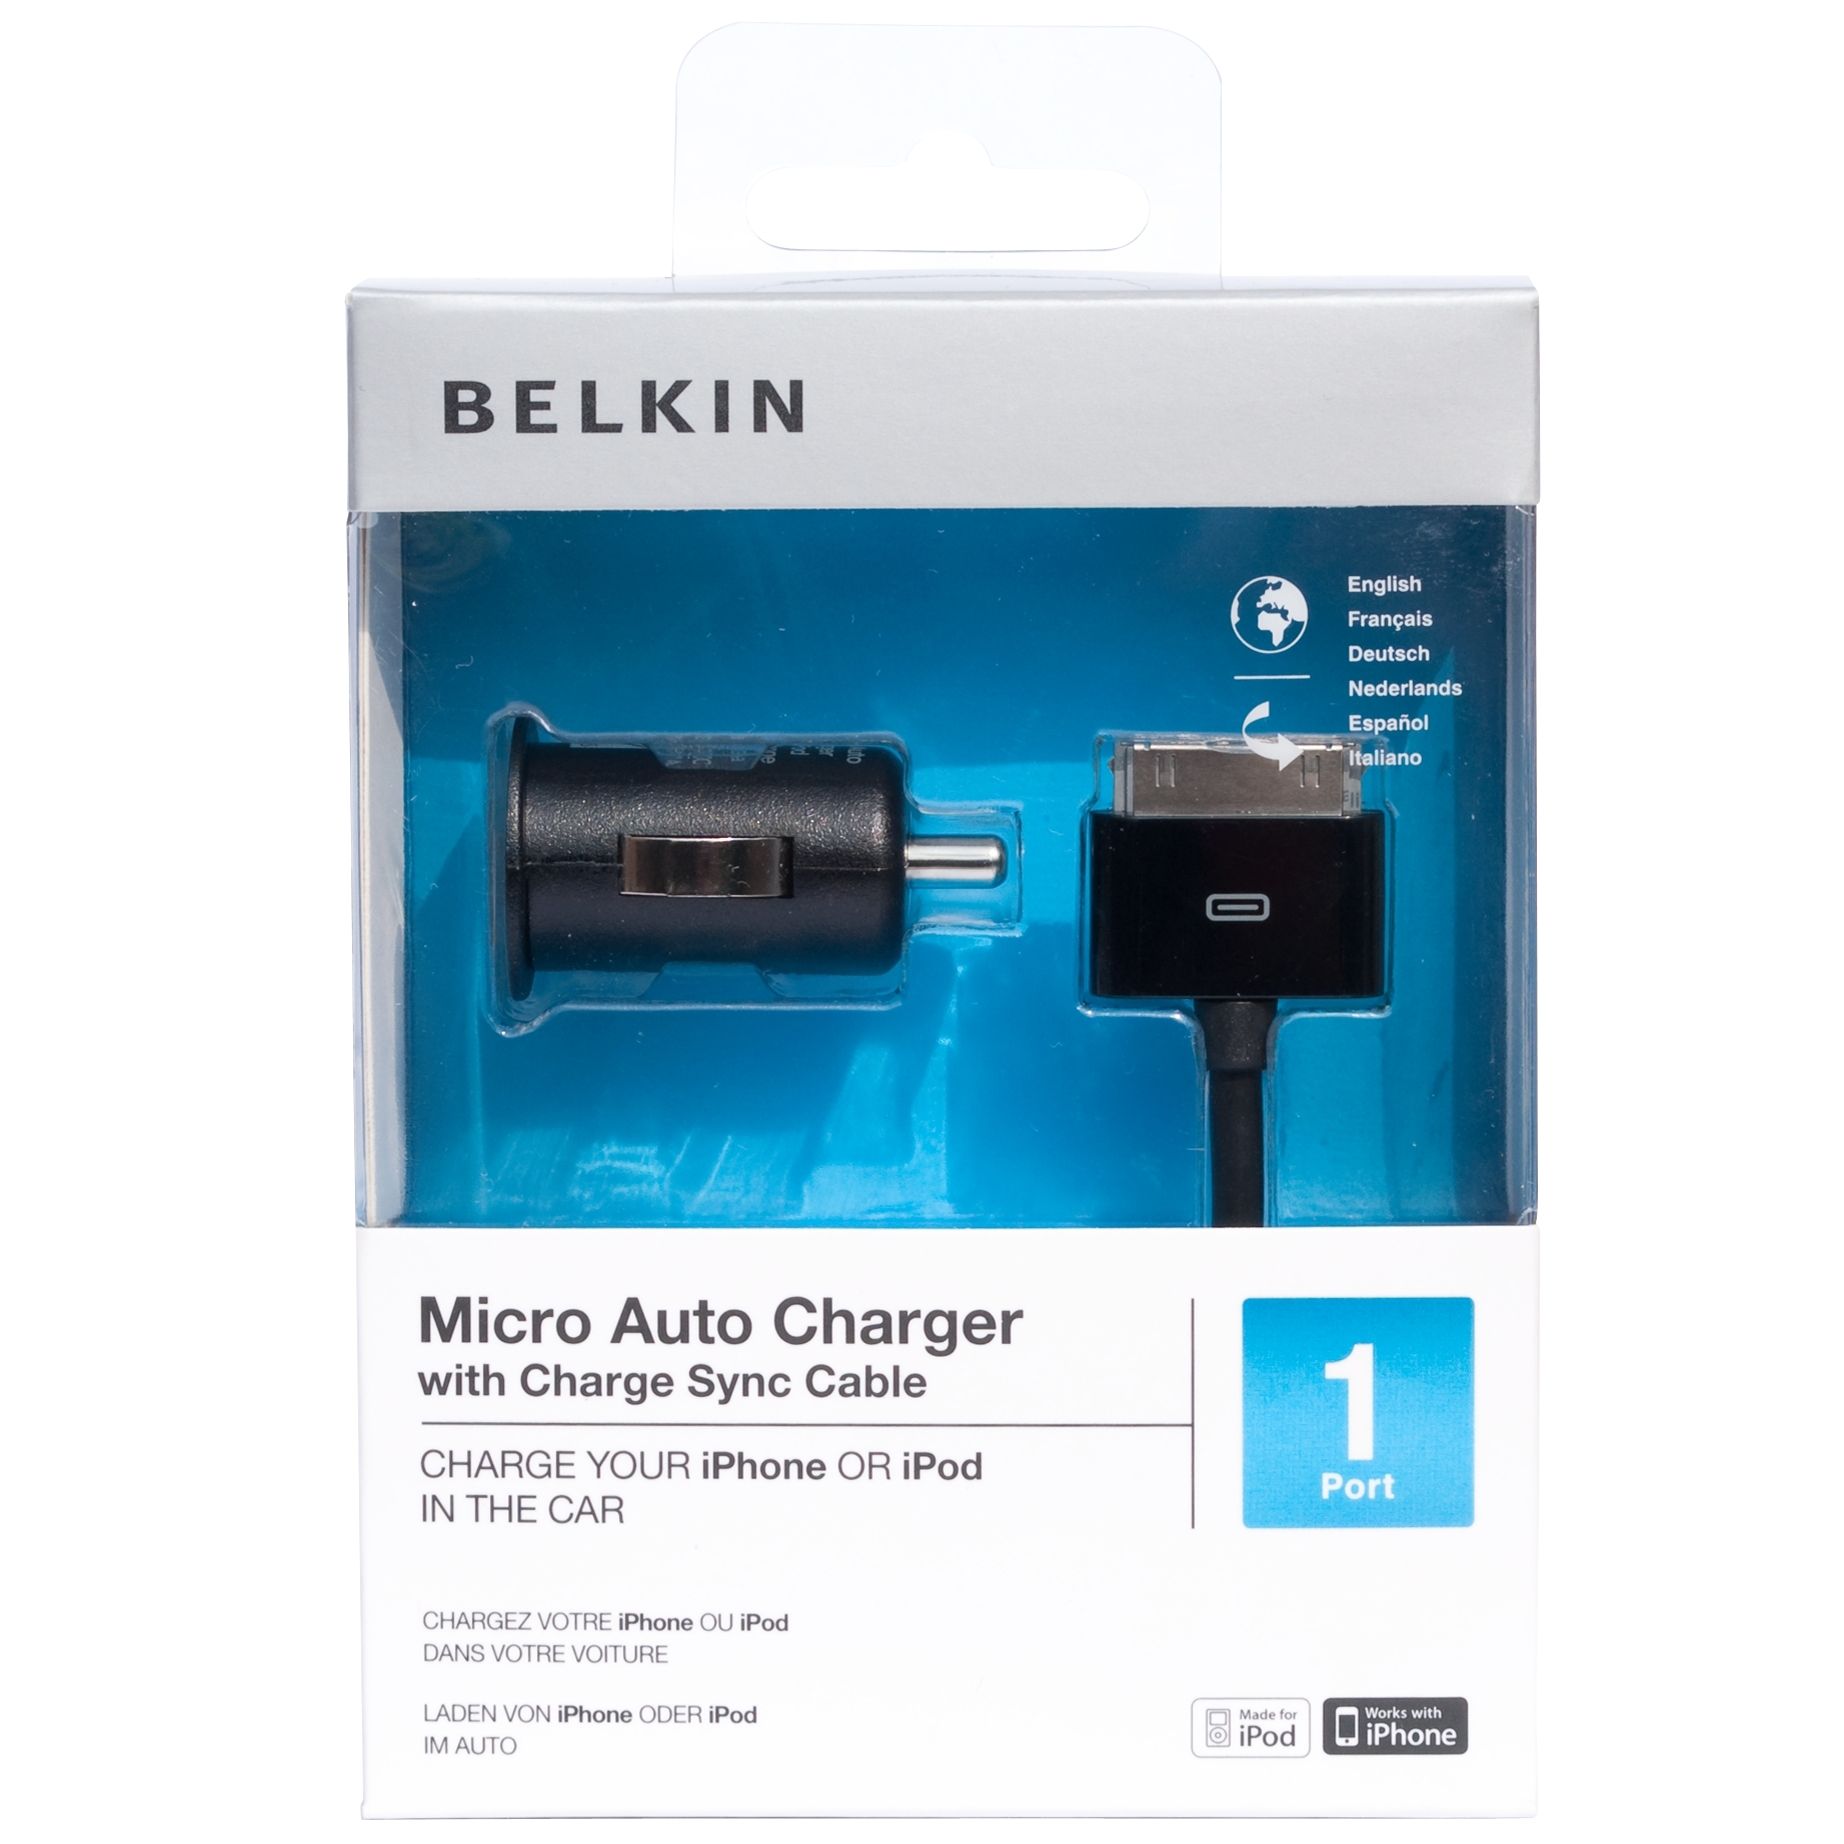 Belkin Universal mini USB CLA. Slots in to Cars Cigar lighter socket. For iPhone